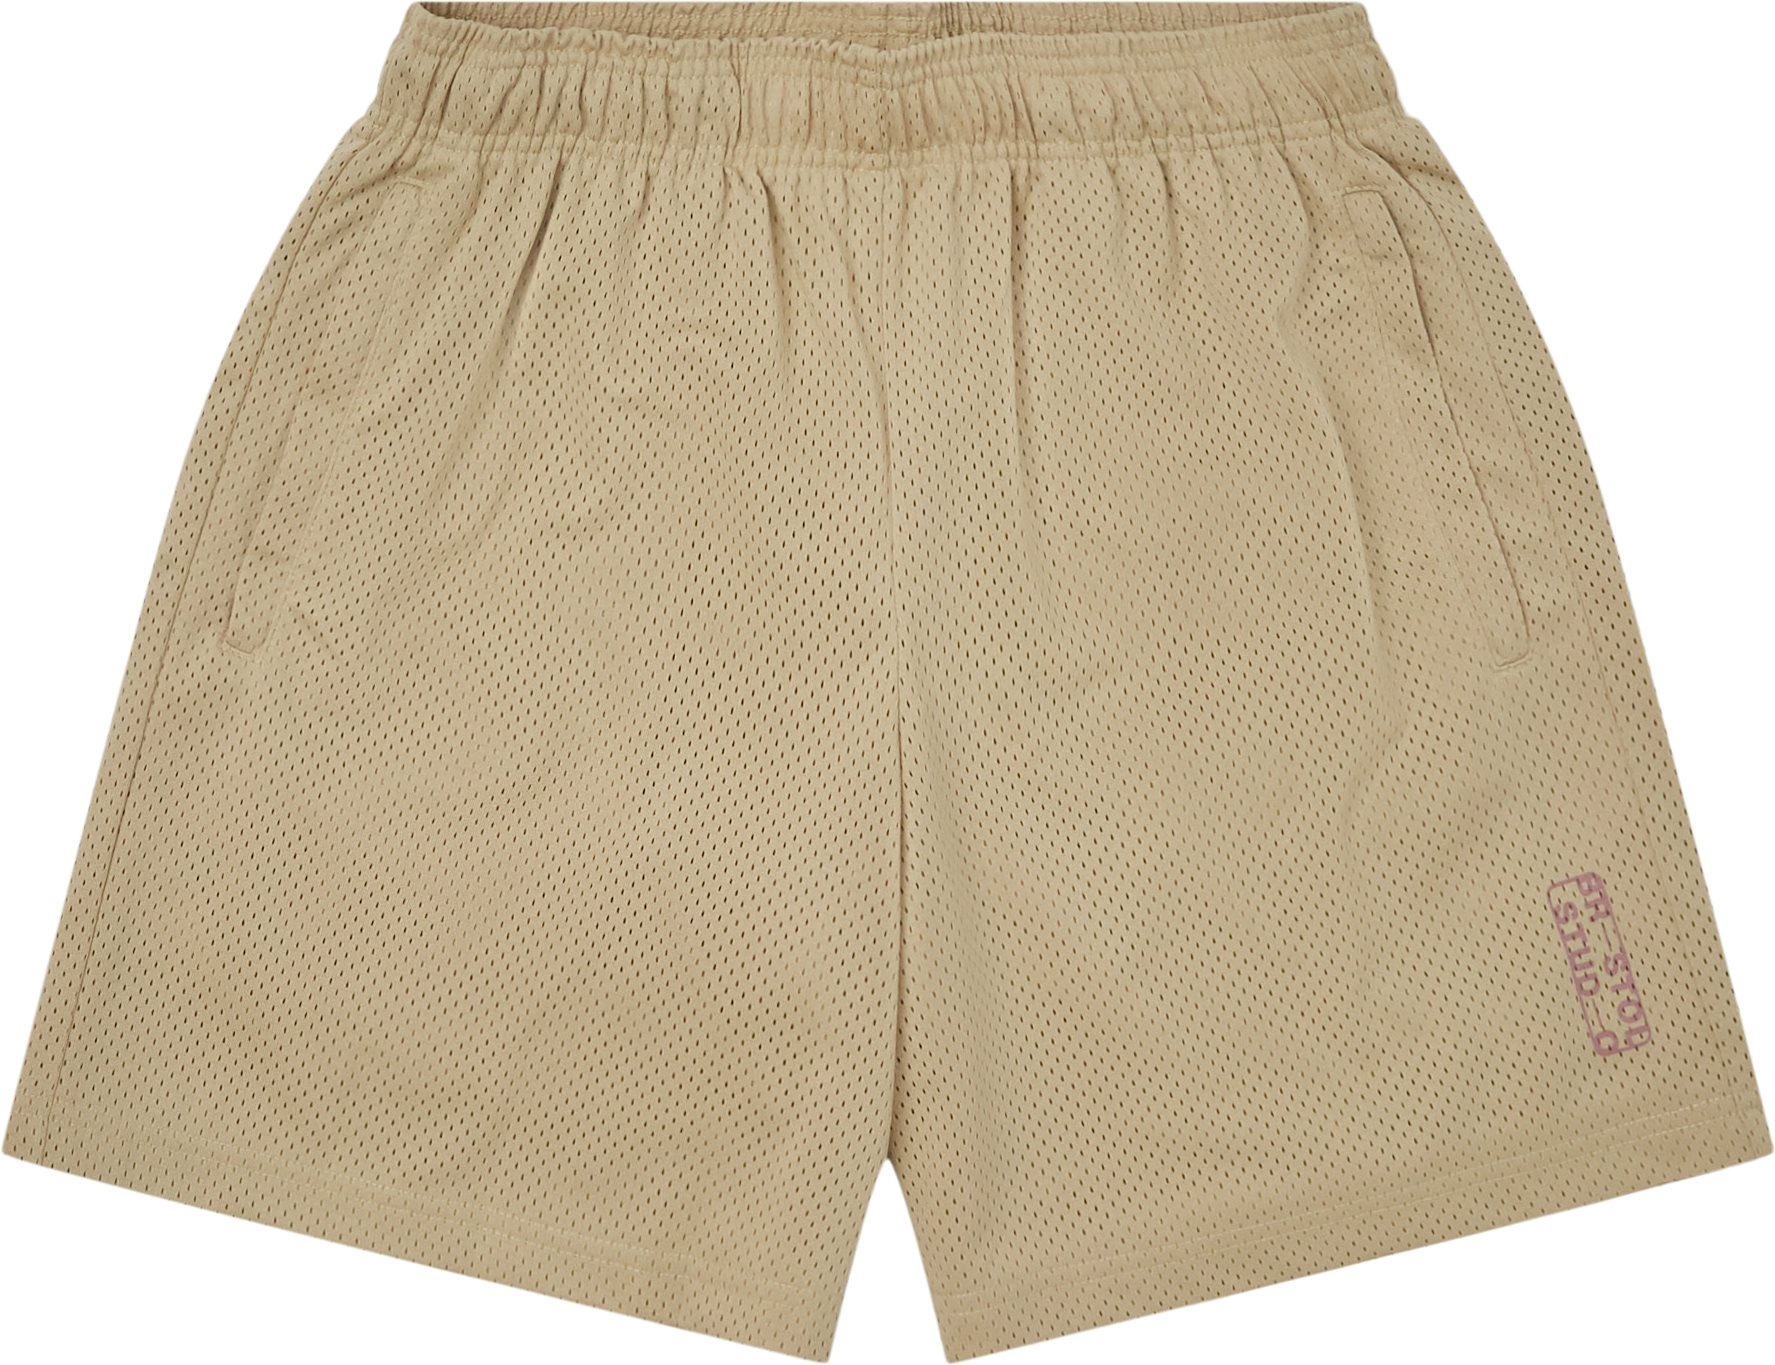 Mesh Core Shorts - Shorts - Regular fit - Sand